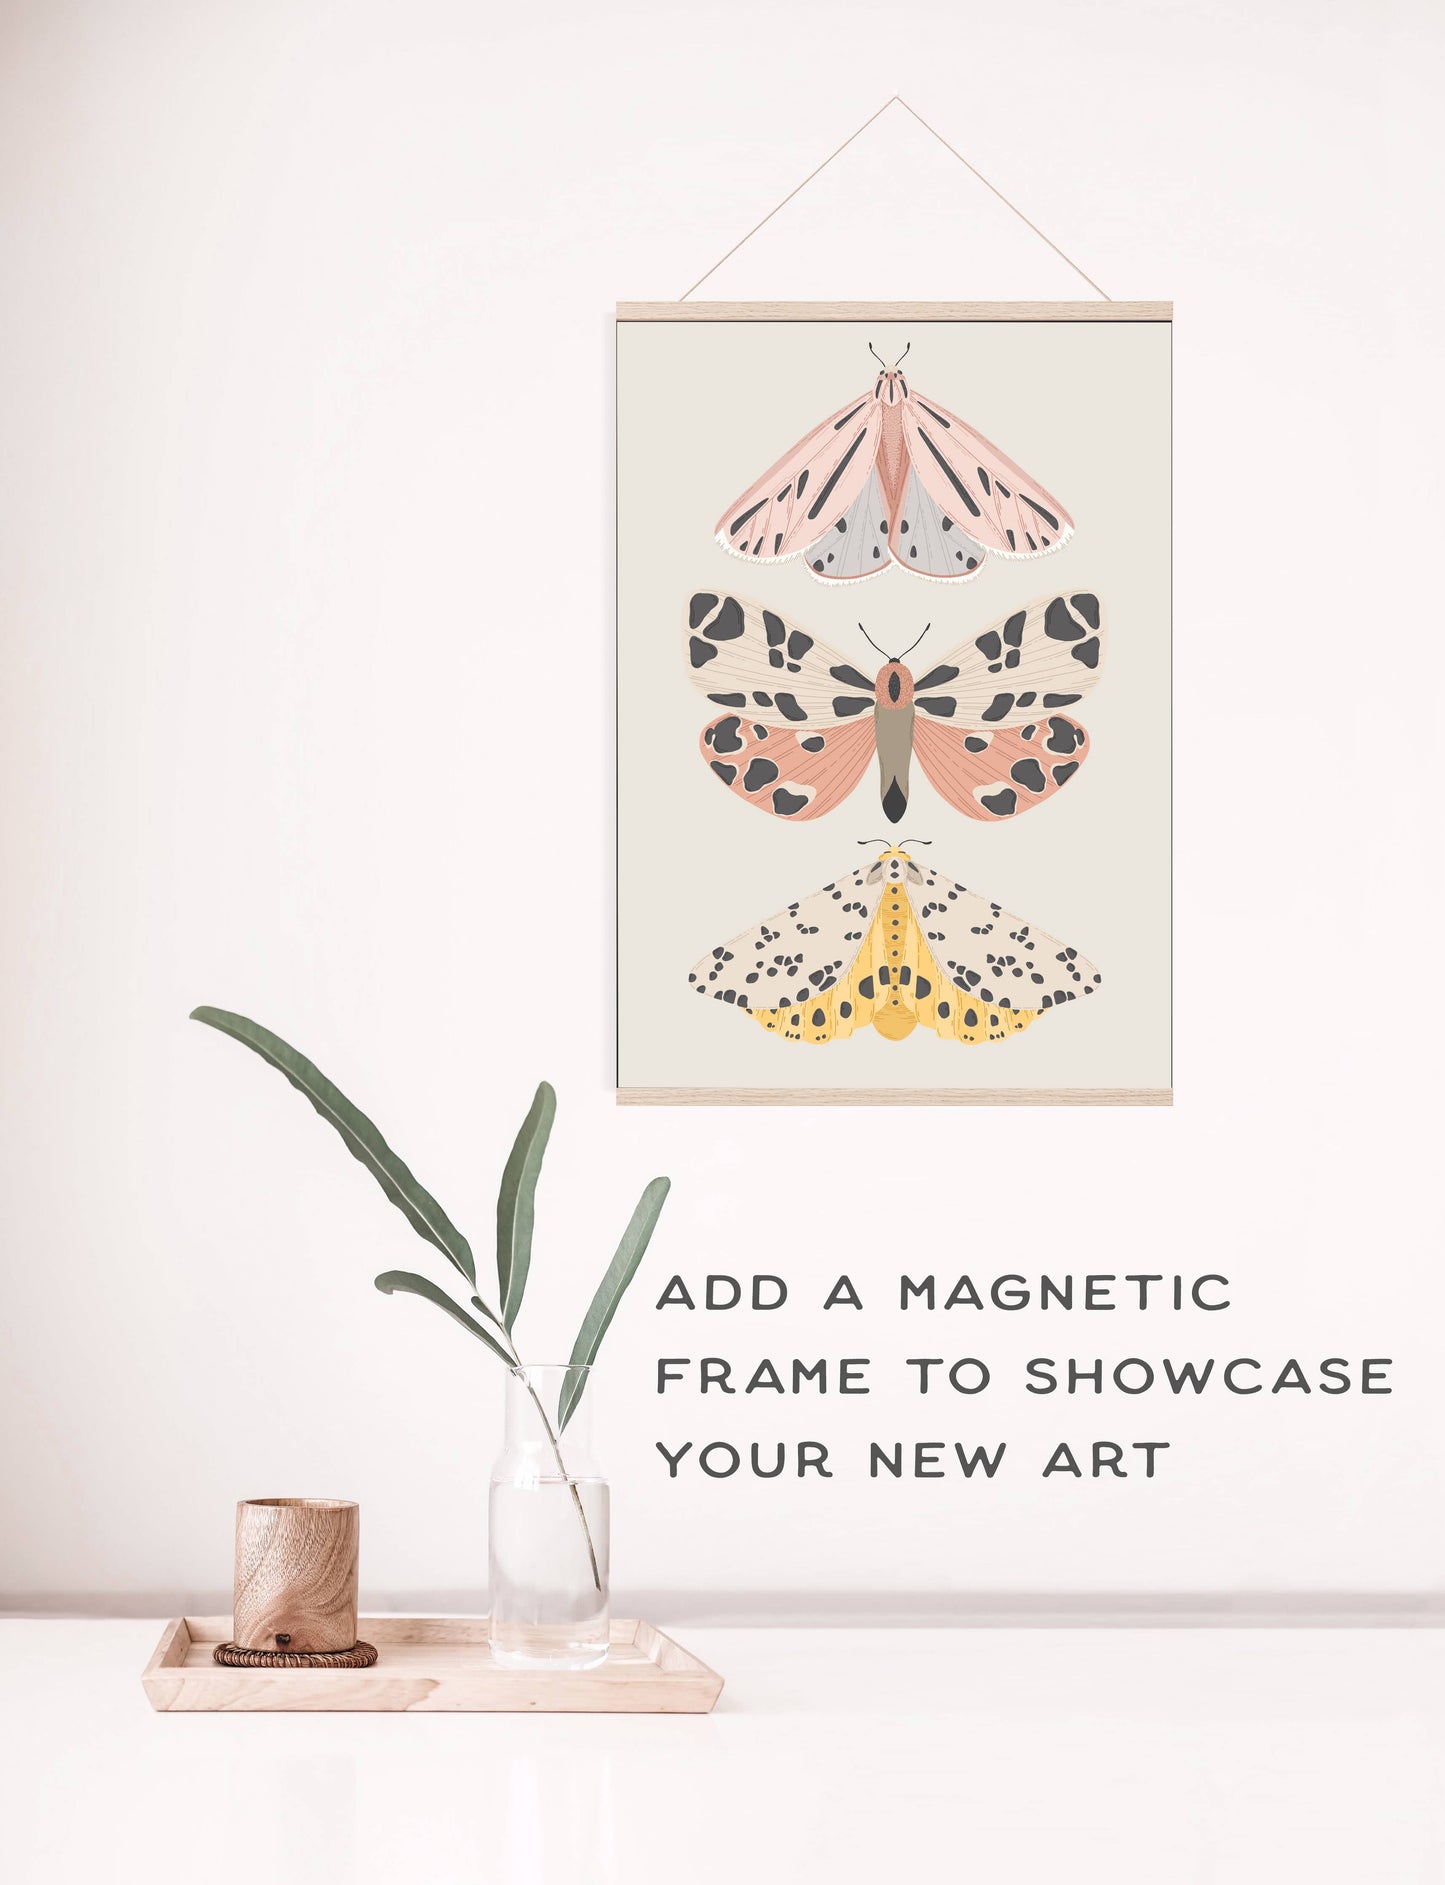 Vintage Butterflies Meditative Art Paint by Number Kit